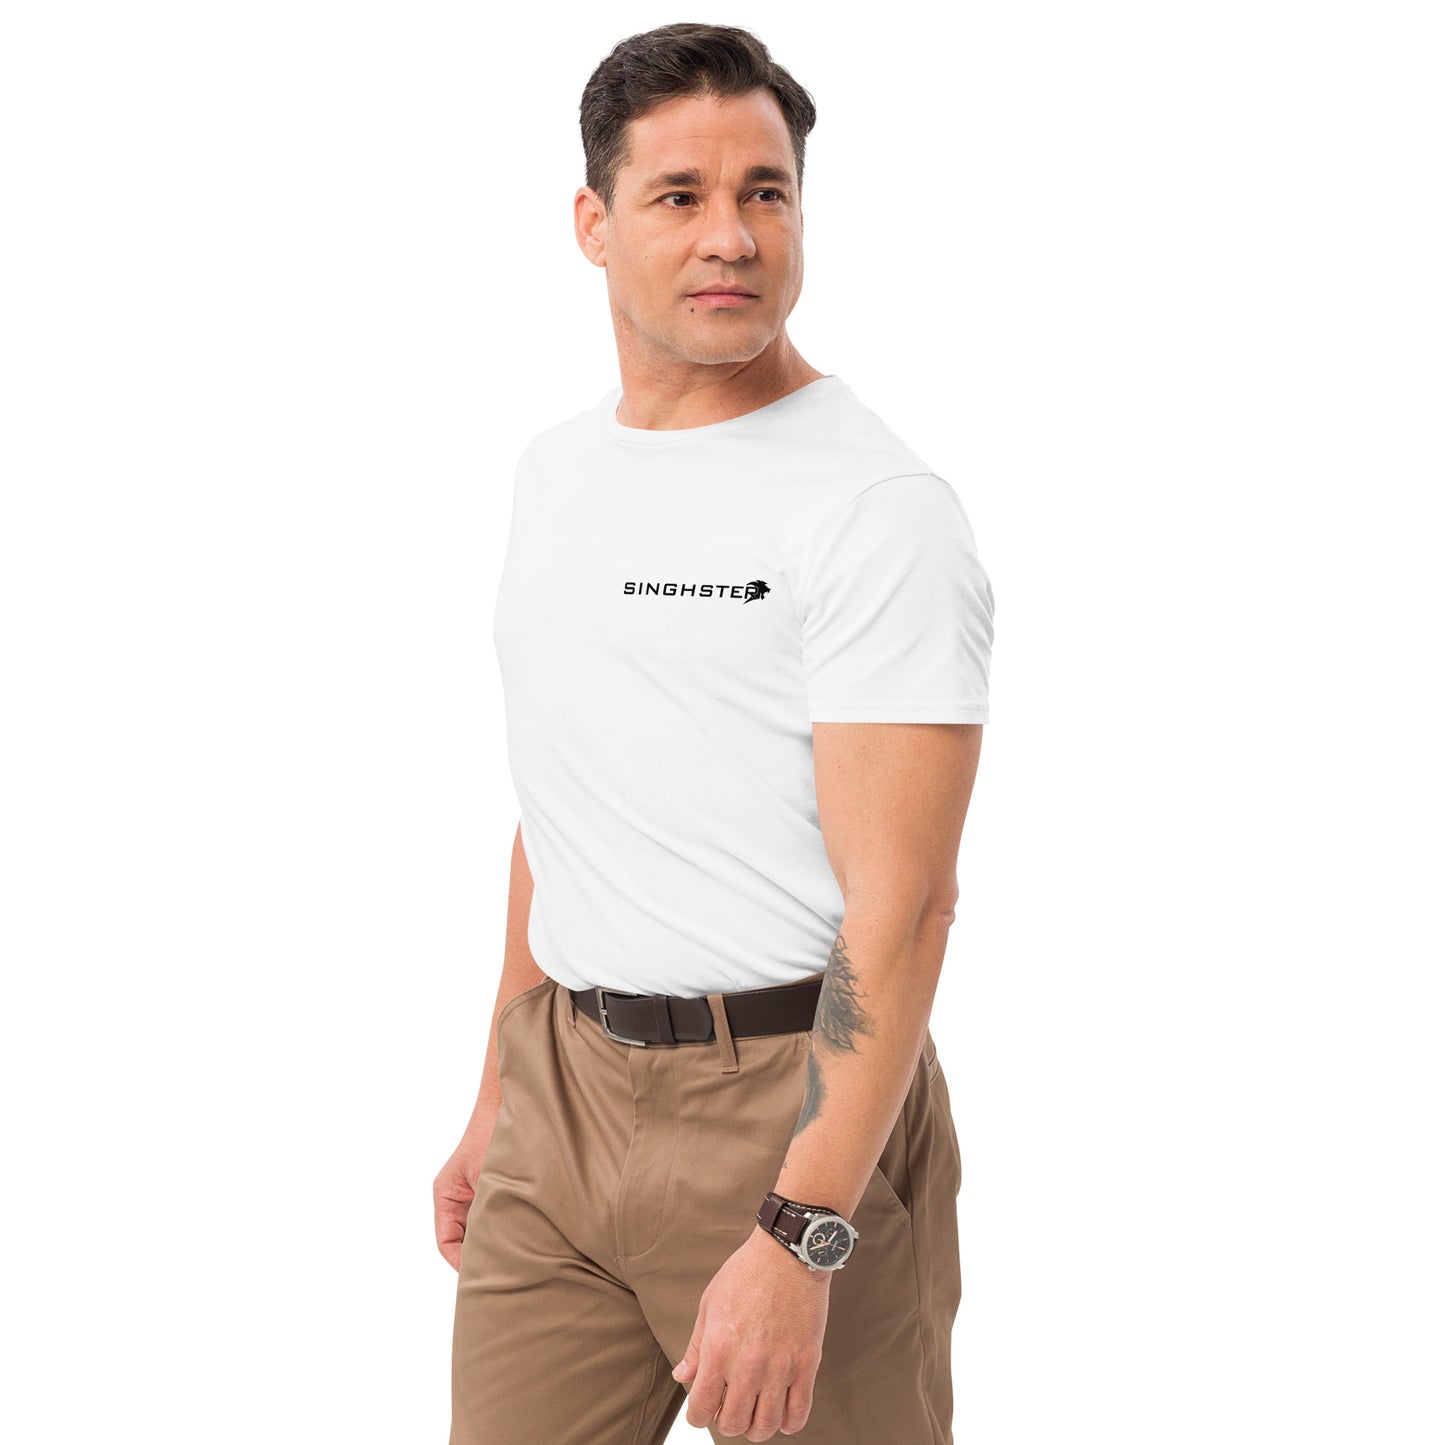 Singhster Premium Cotton T-shirt